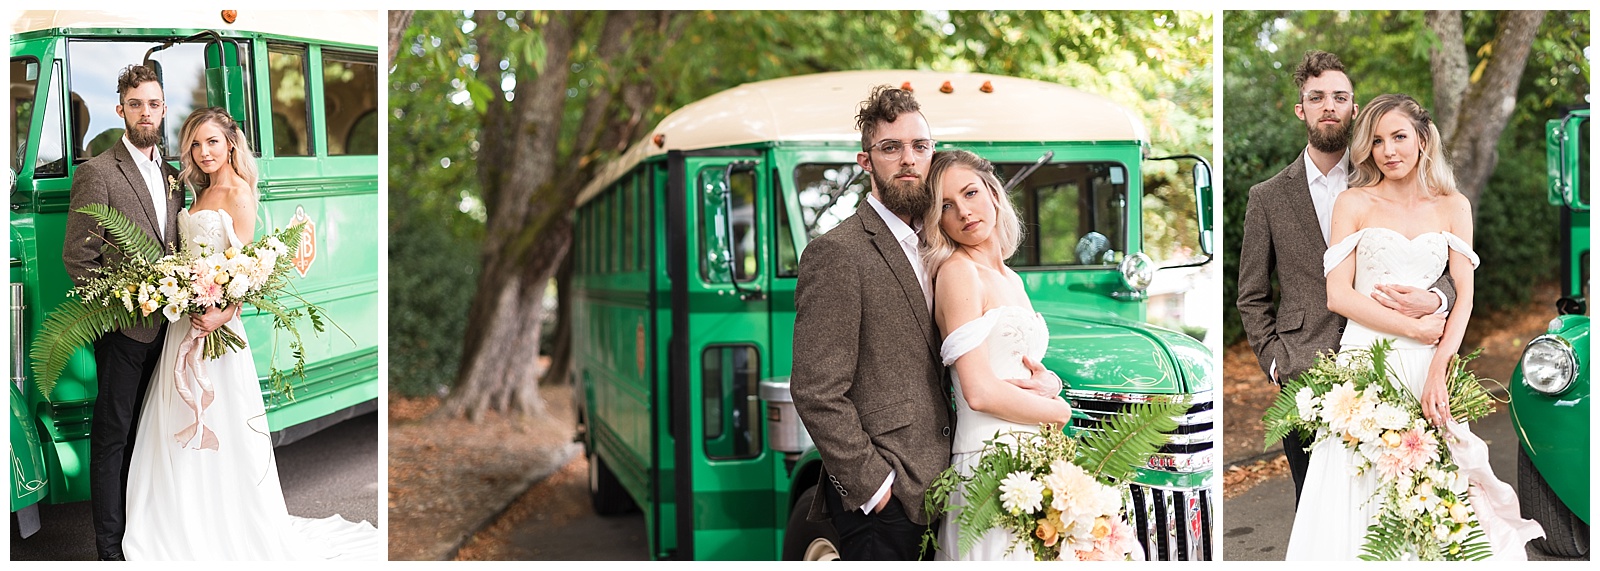 A Gray Gables Estate Wedding Styled Shoot in Portland 01.jpg